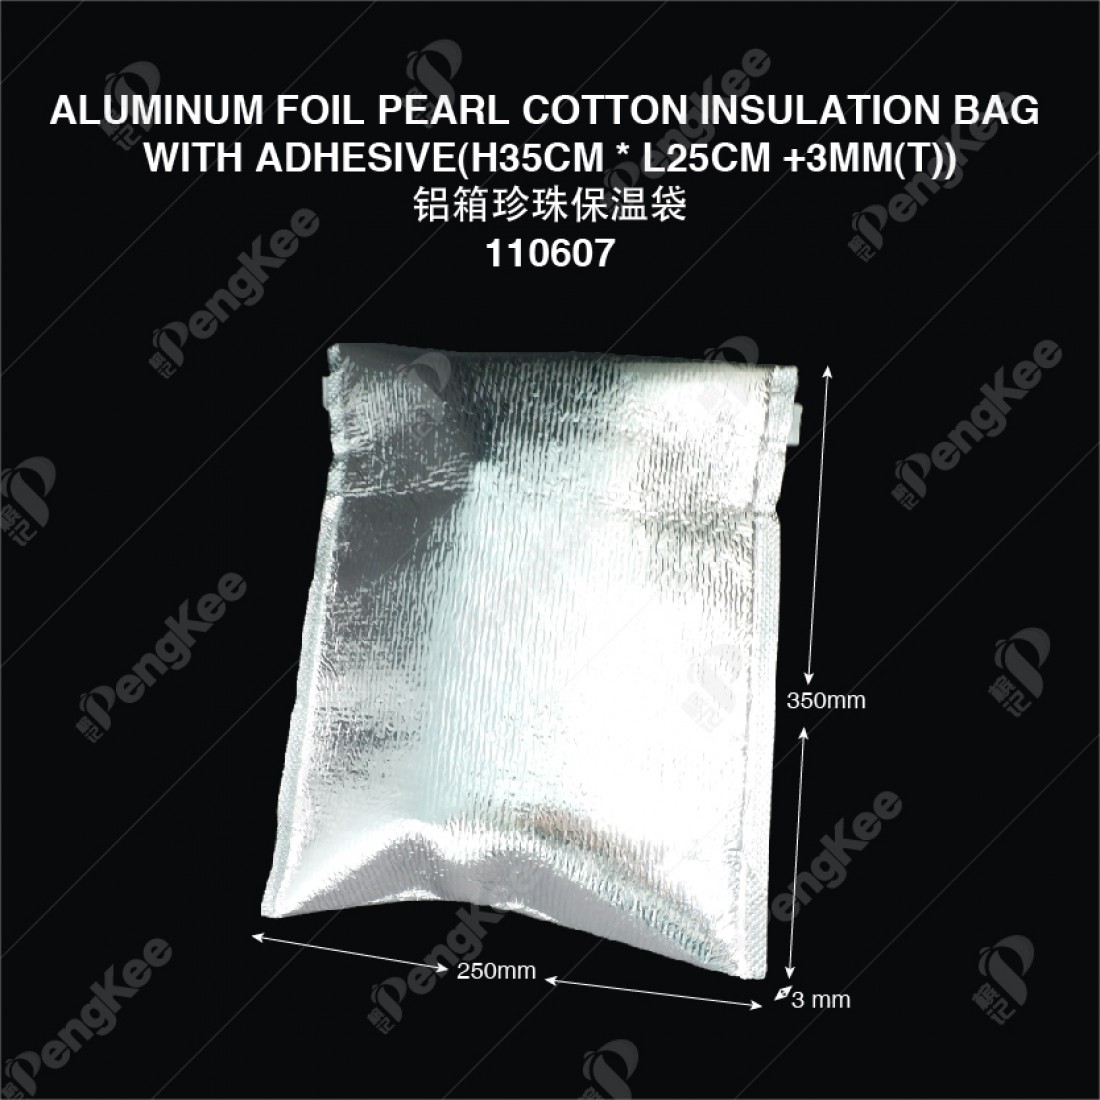 ALUMINUM FOIL PEARL COTTON INSULATION BAG WITH ADHESIVE(H35CM * L25CM +3MM(T)) 铝箱珍珠保温袋 (50'S)